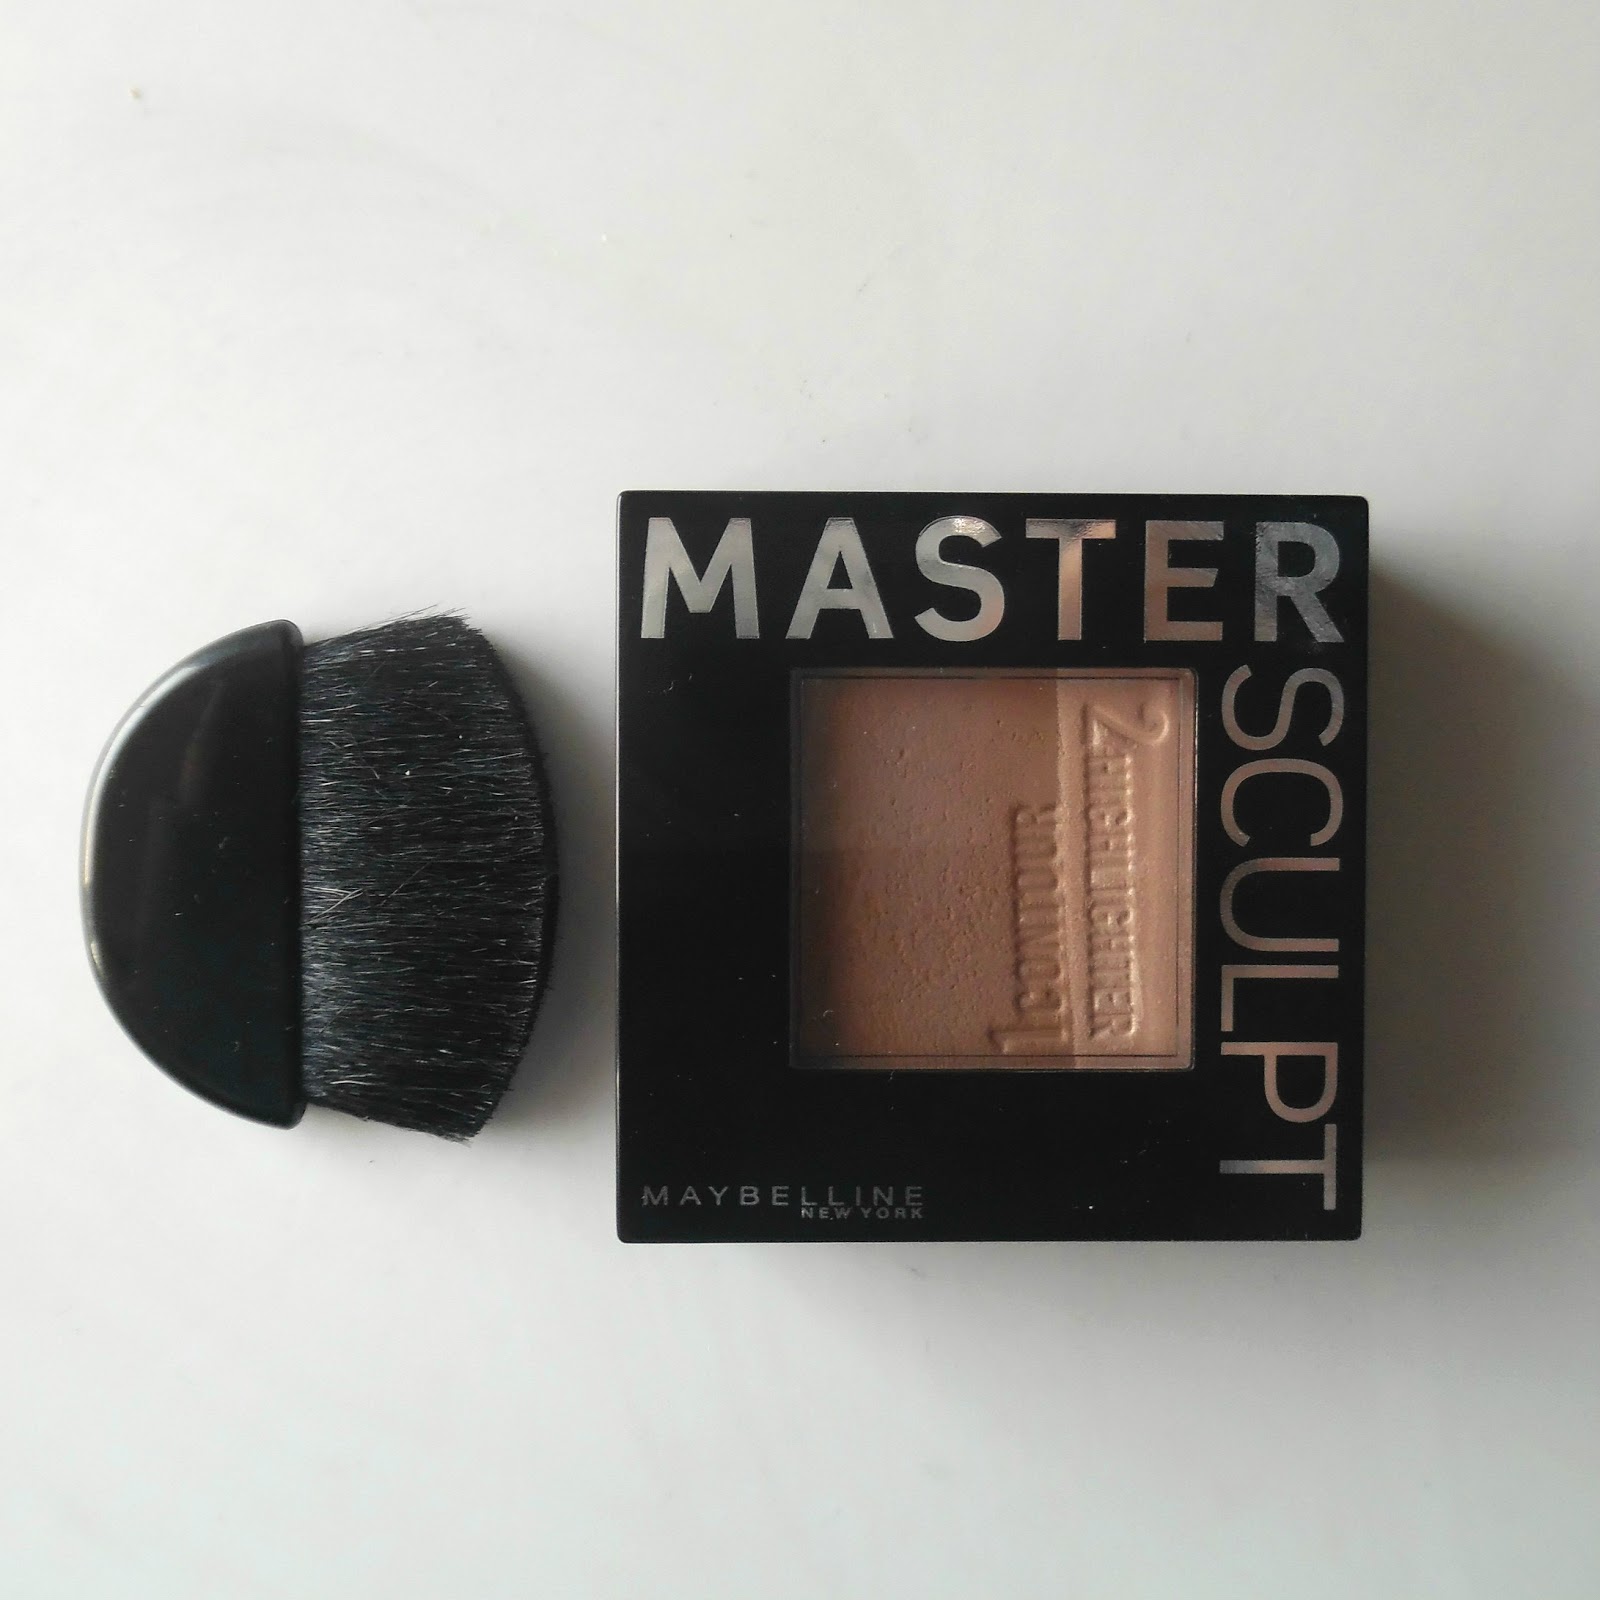 Maybelline Mastersculpt Contouring Palette Review